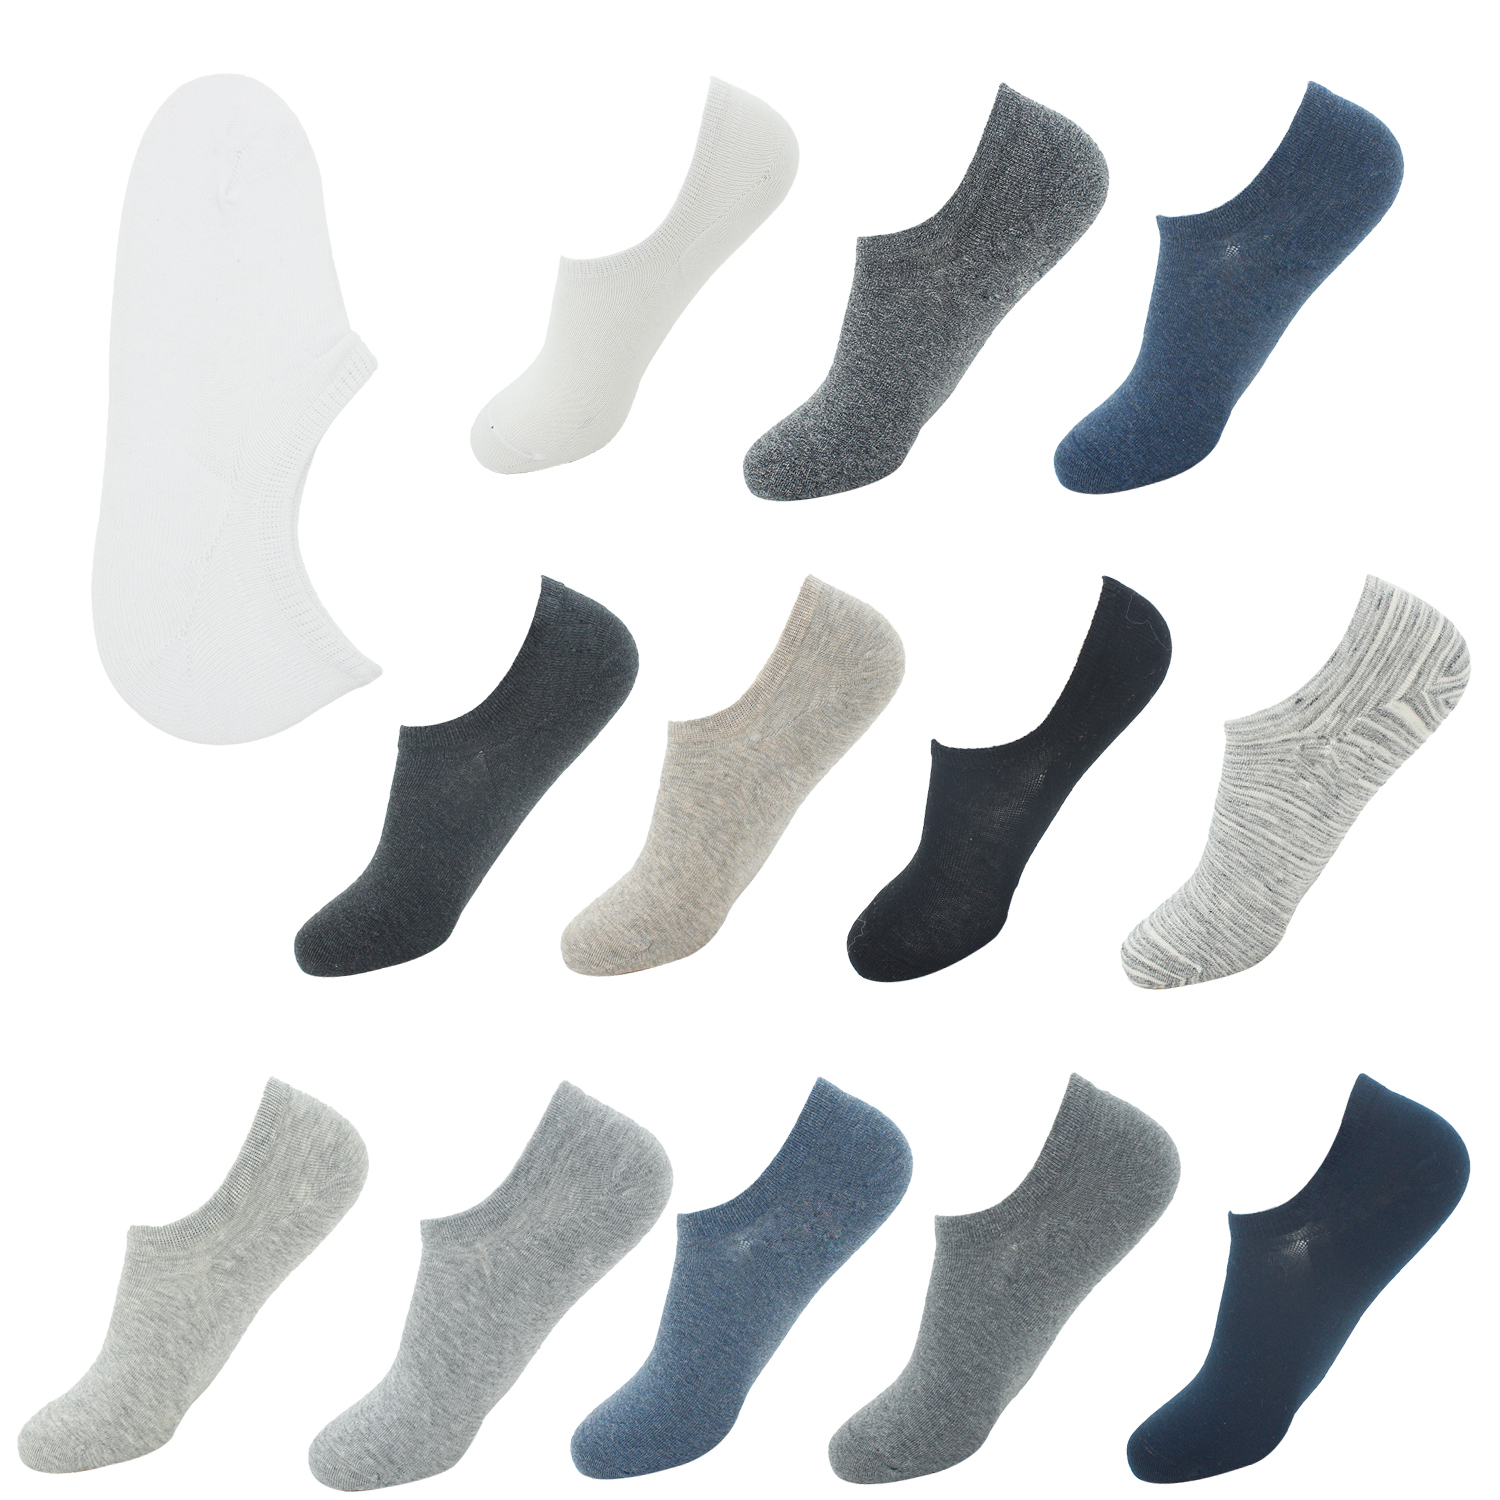 Pack of 2 mak socks black and white 42-47 size